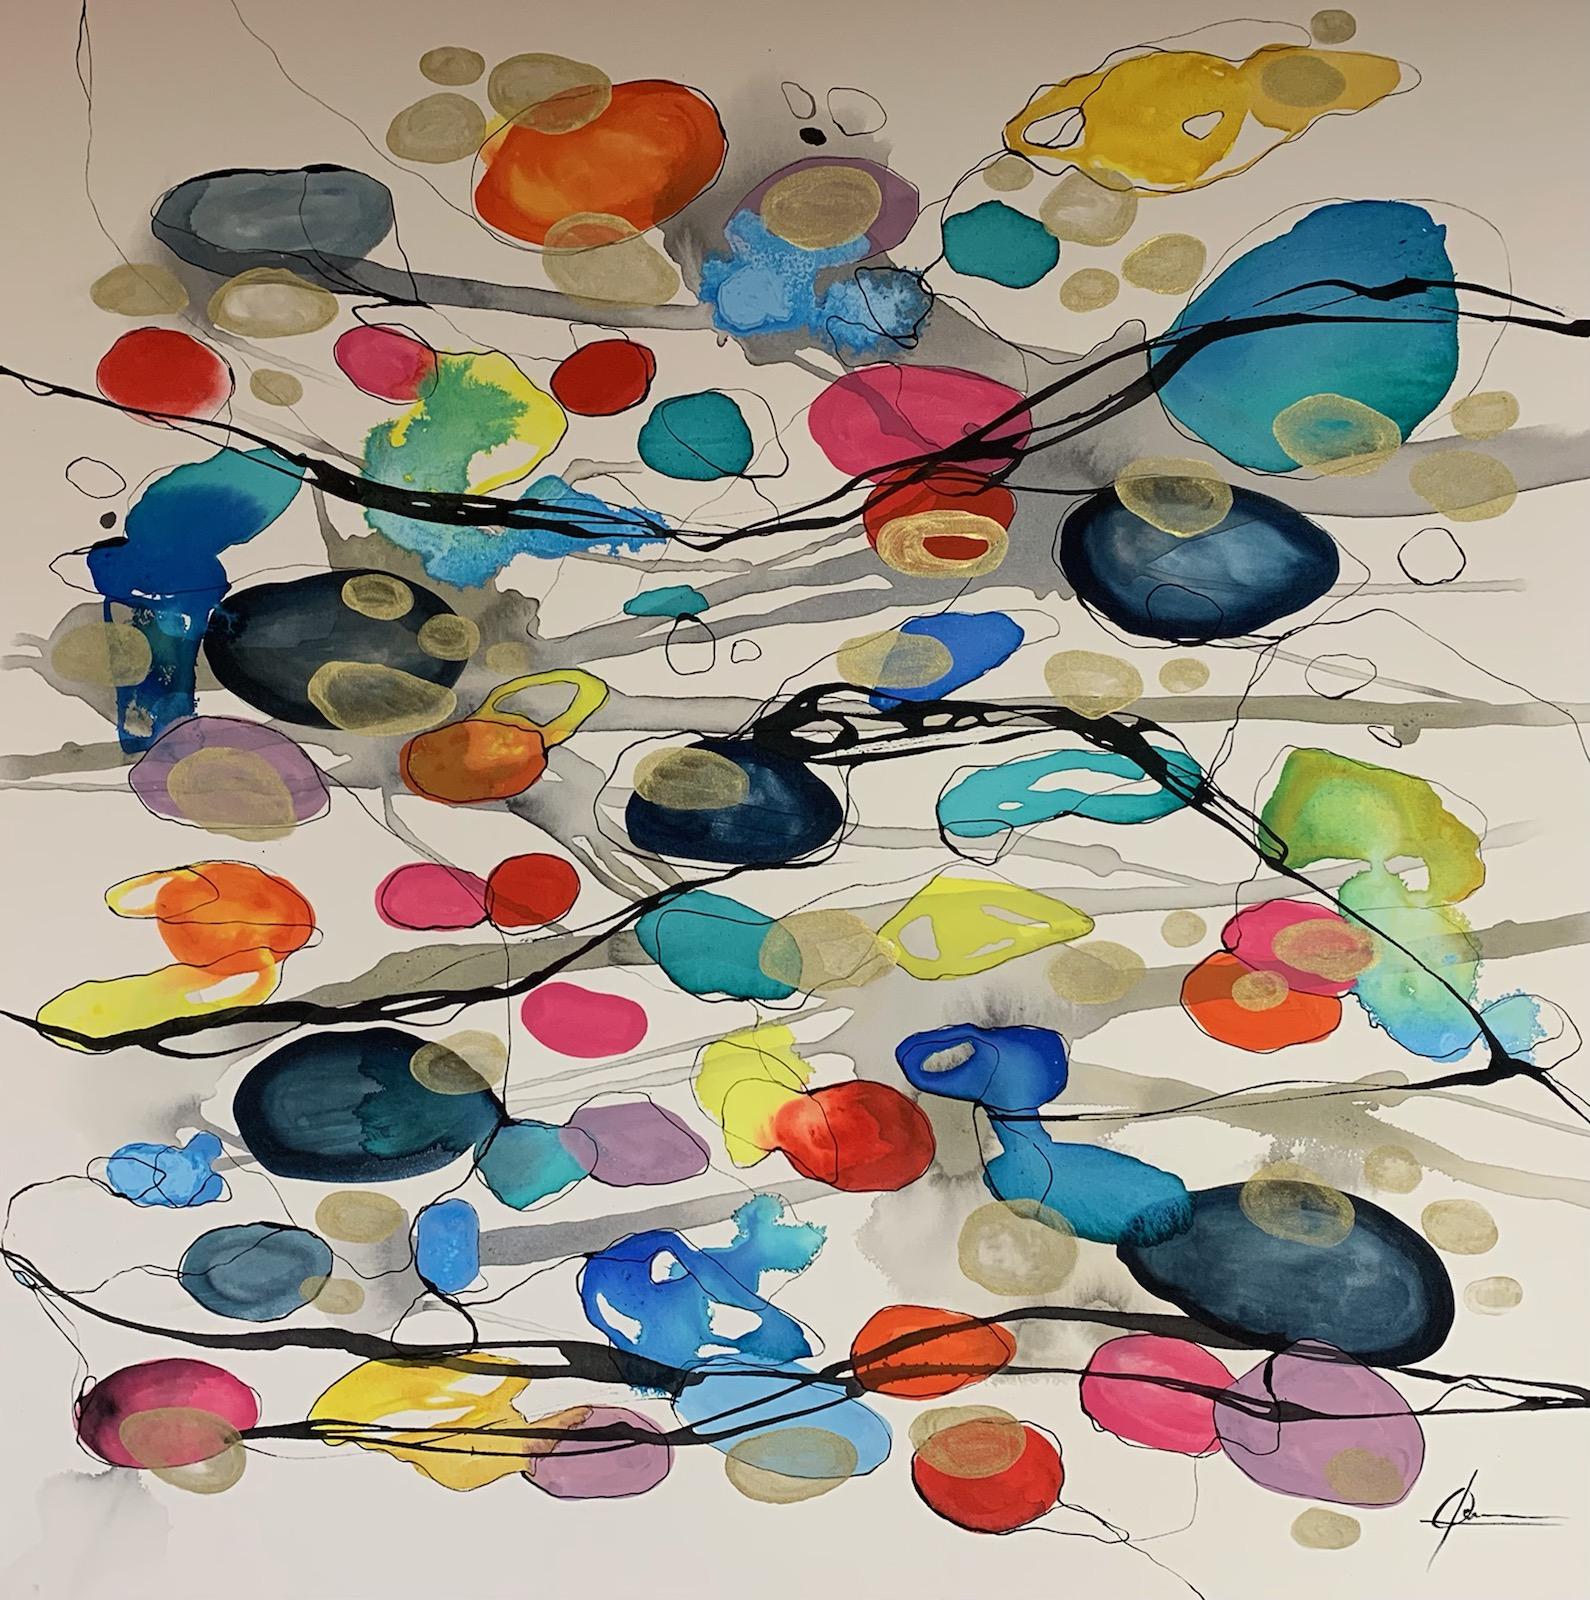 UNIVERSO COSMICO, acrylic on canvas, 120 cm x 120 cm